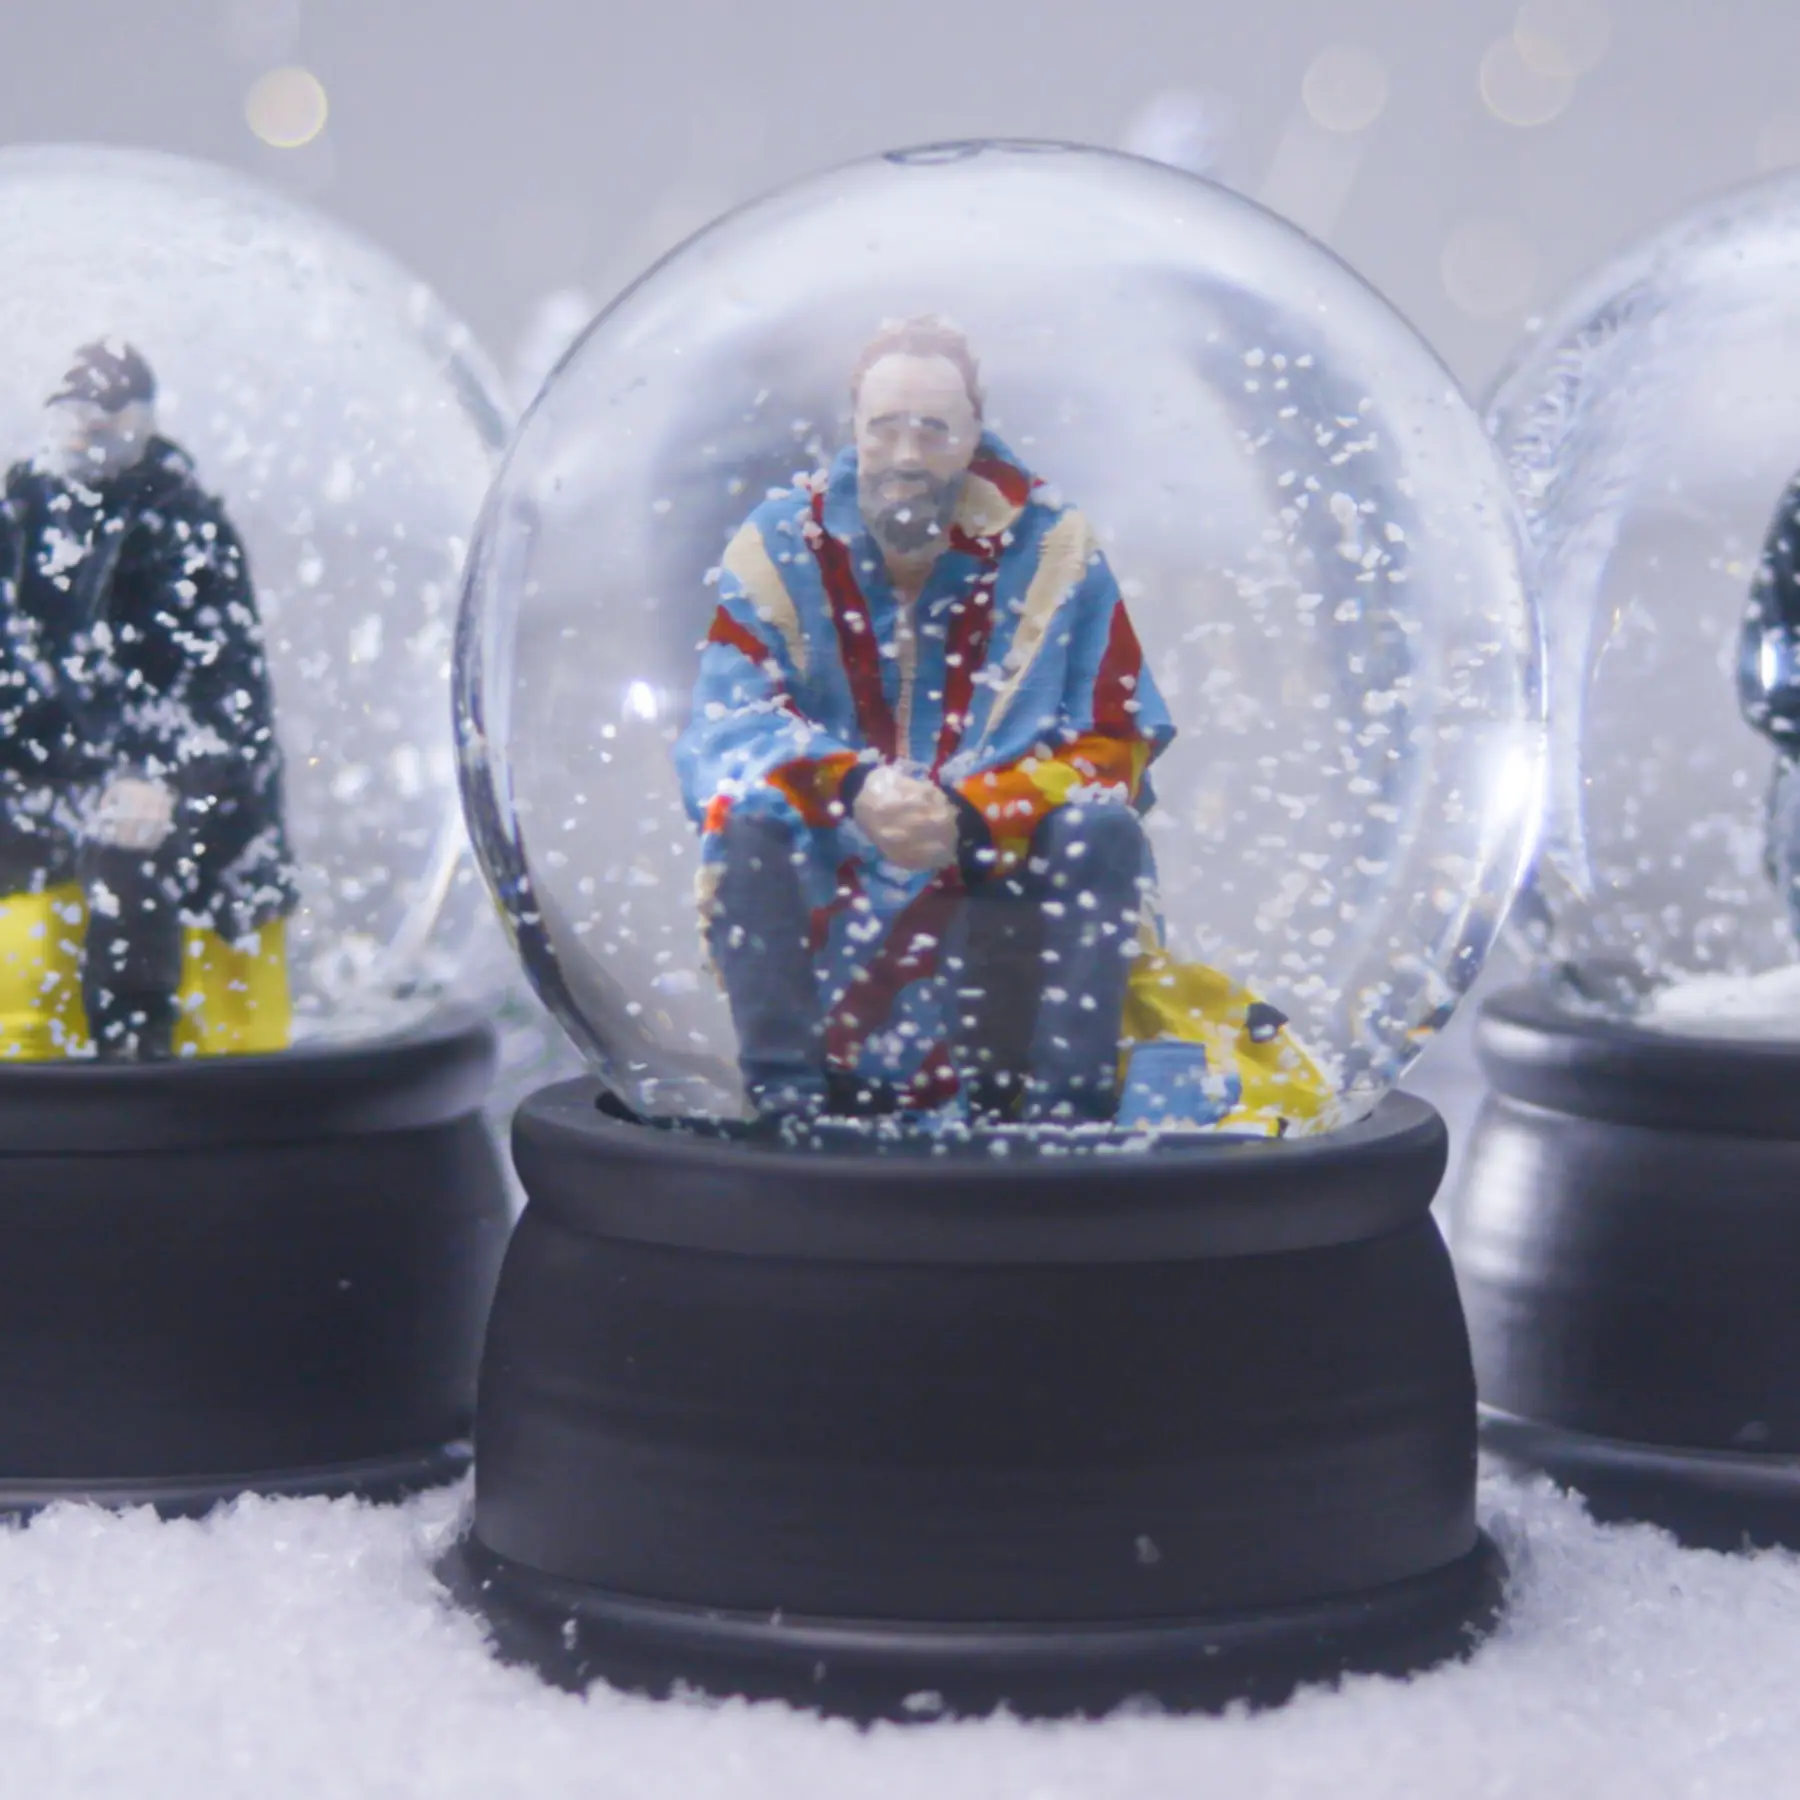 Snow globes